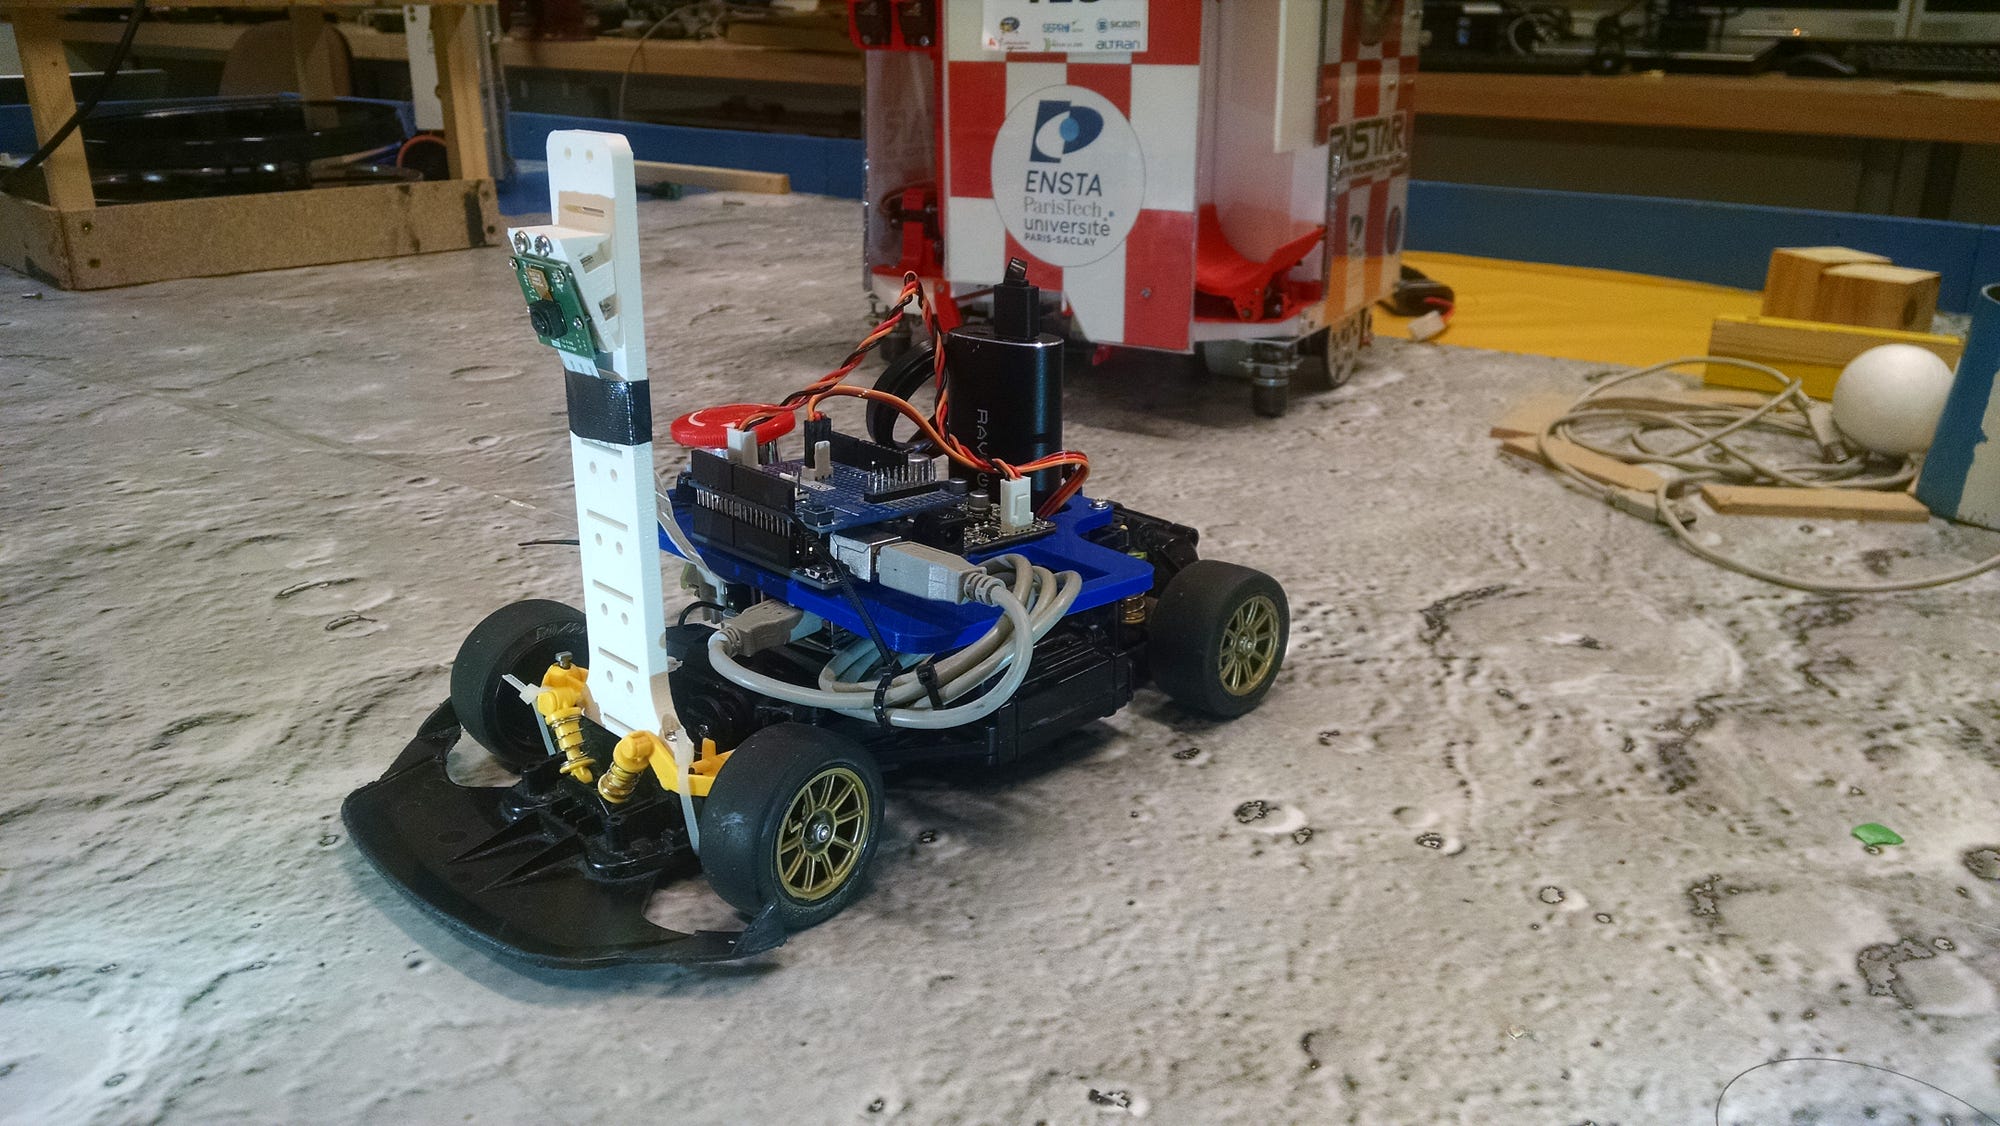 The racing robot